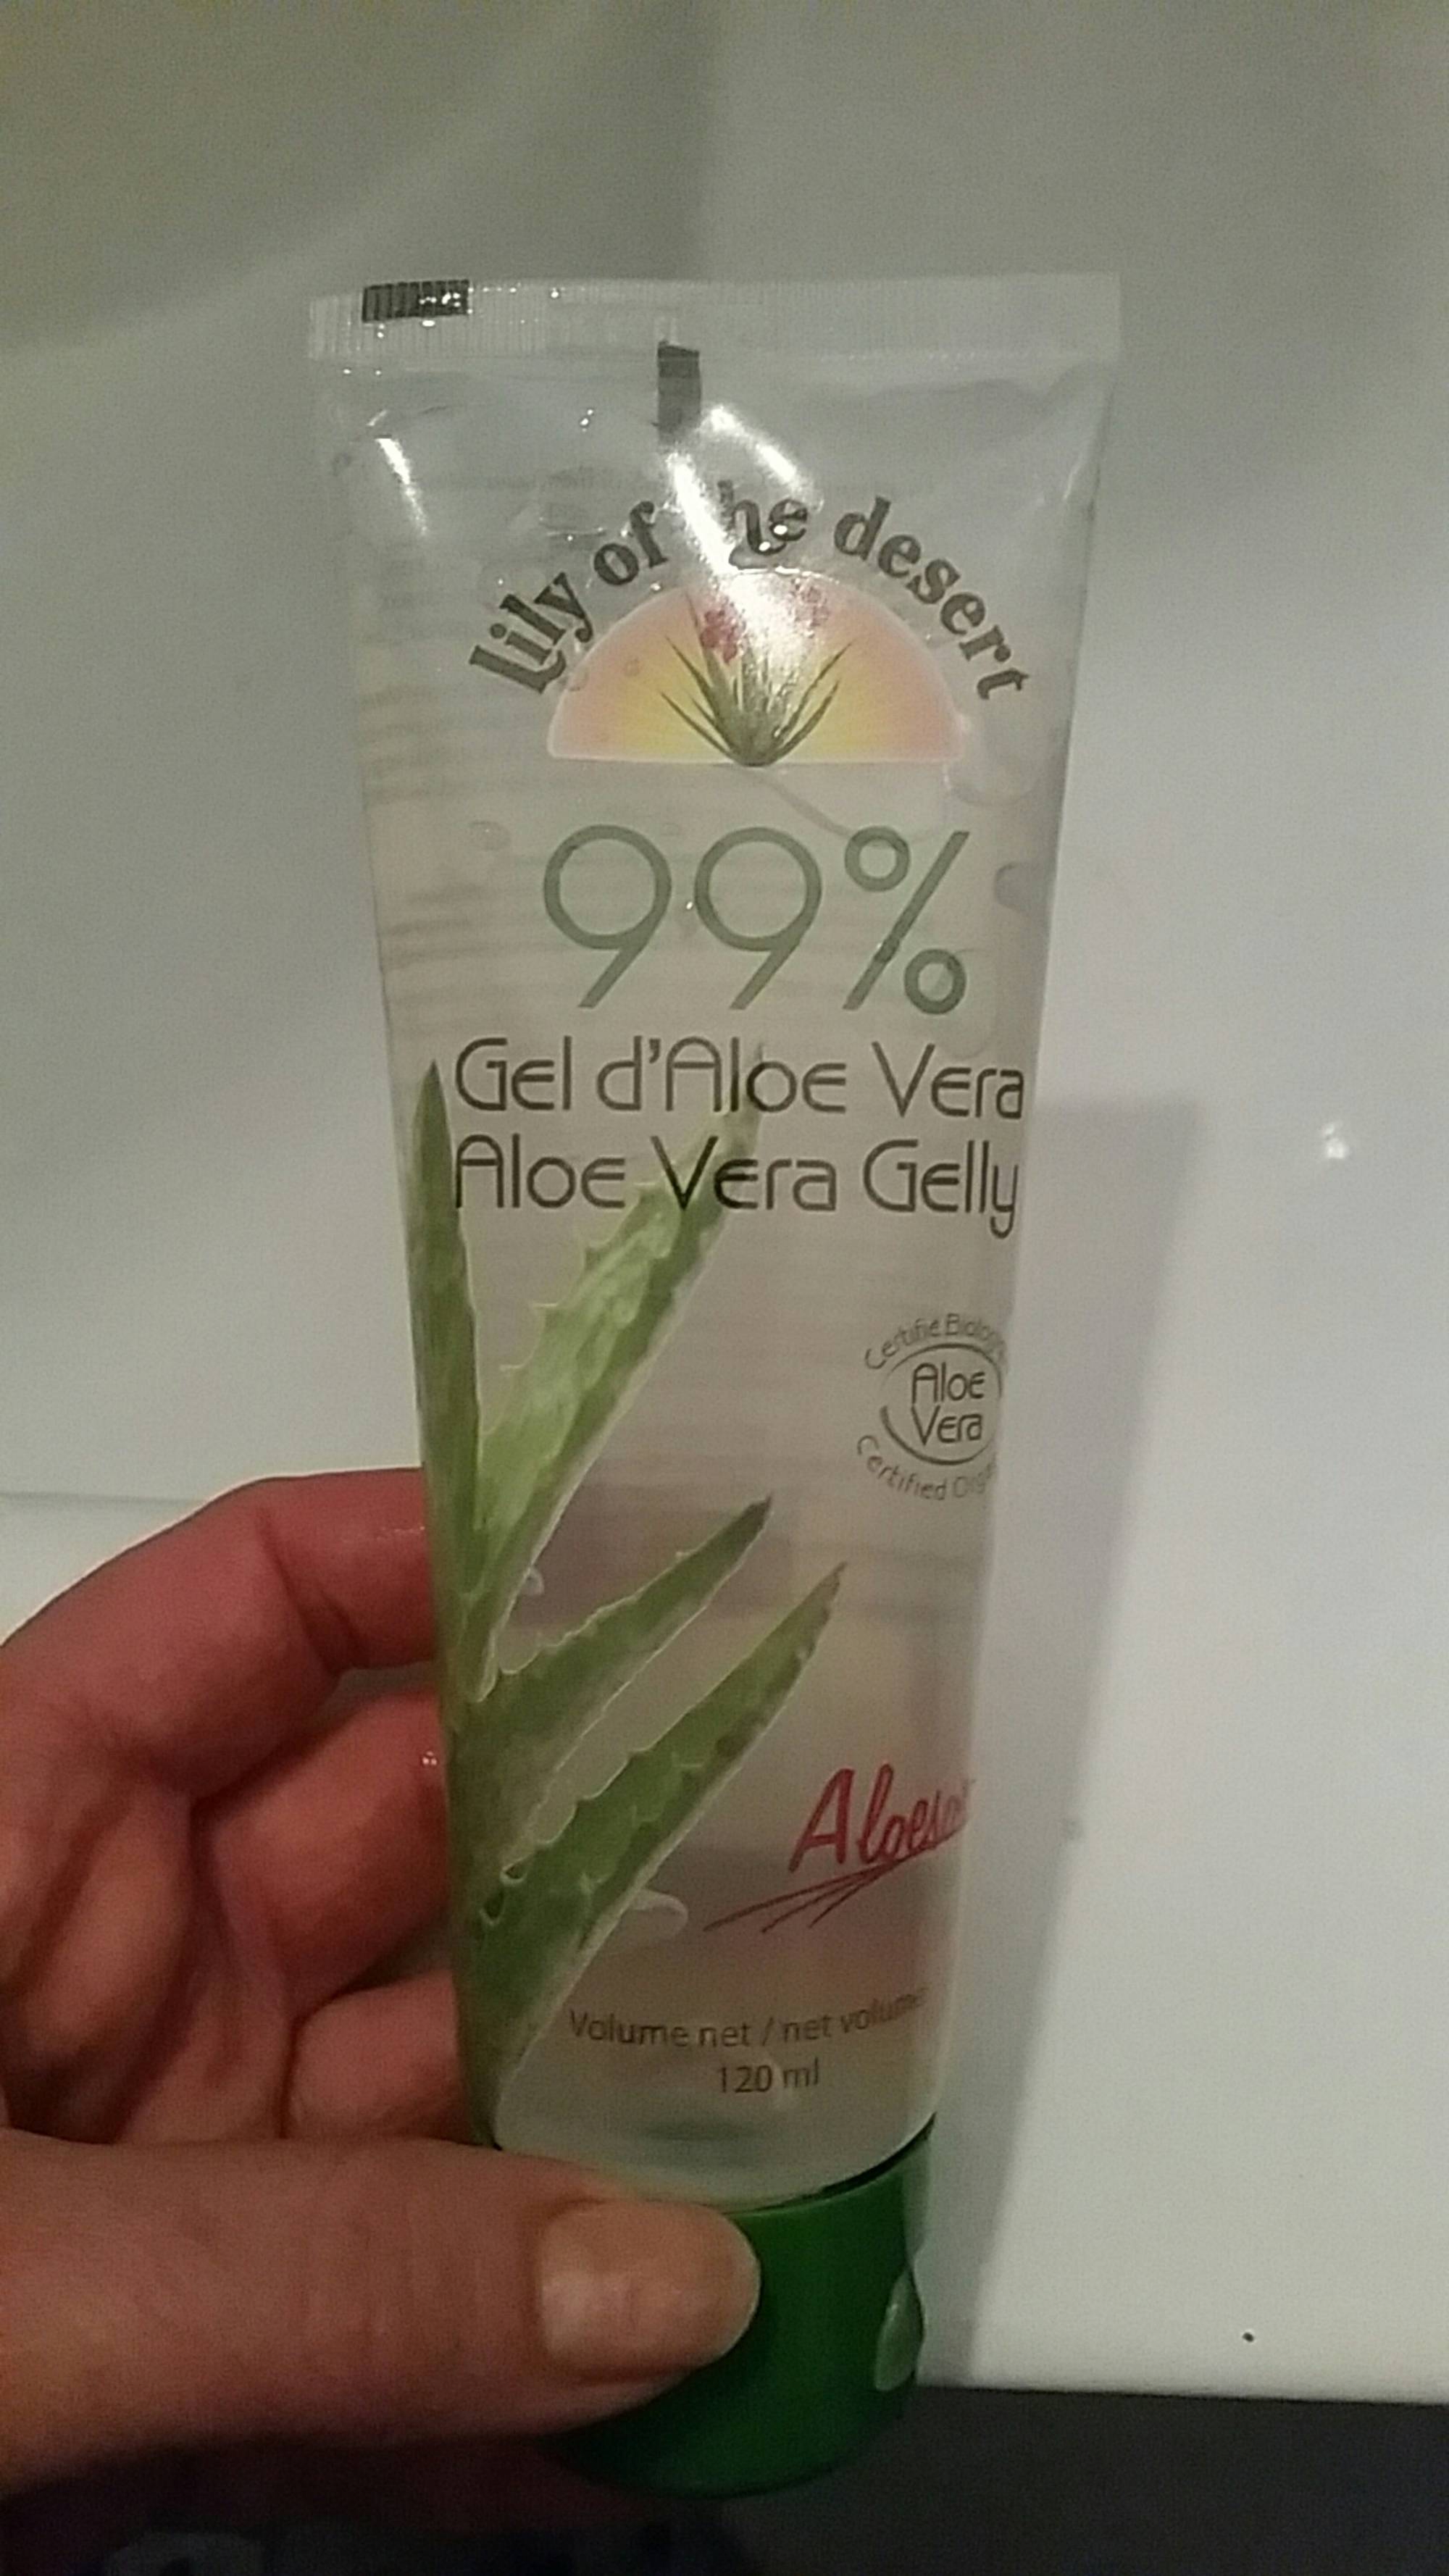 LILY OF THE DESERT - Gel d'aloe vera 99%